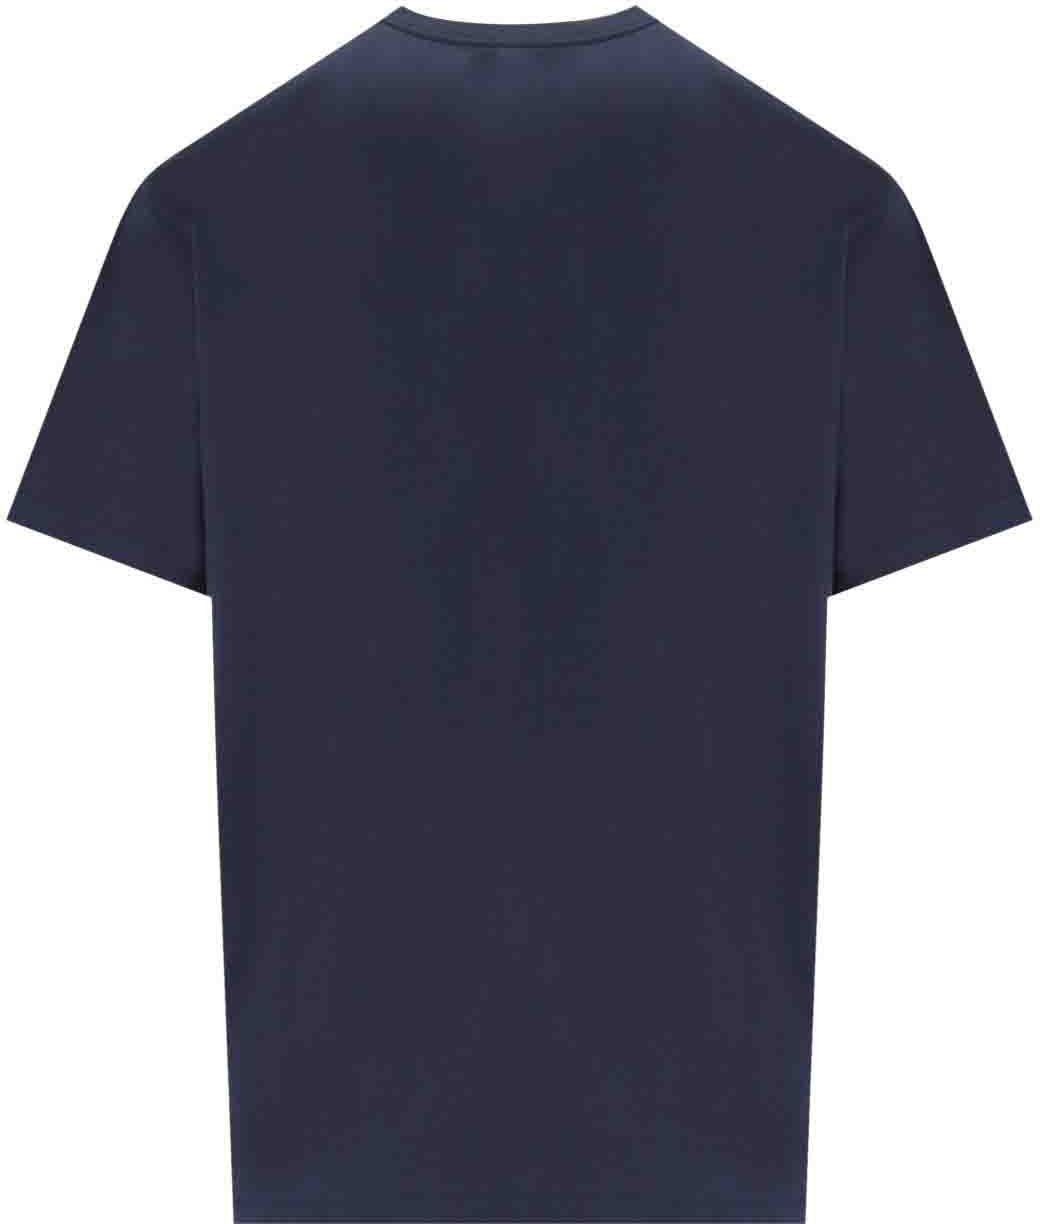 Carhartt Wip S/s Madison Navy Blue T-shirt Blue Blauw